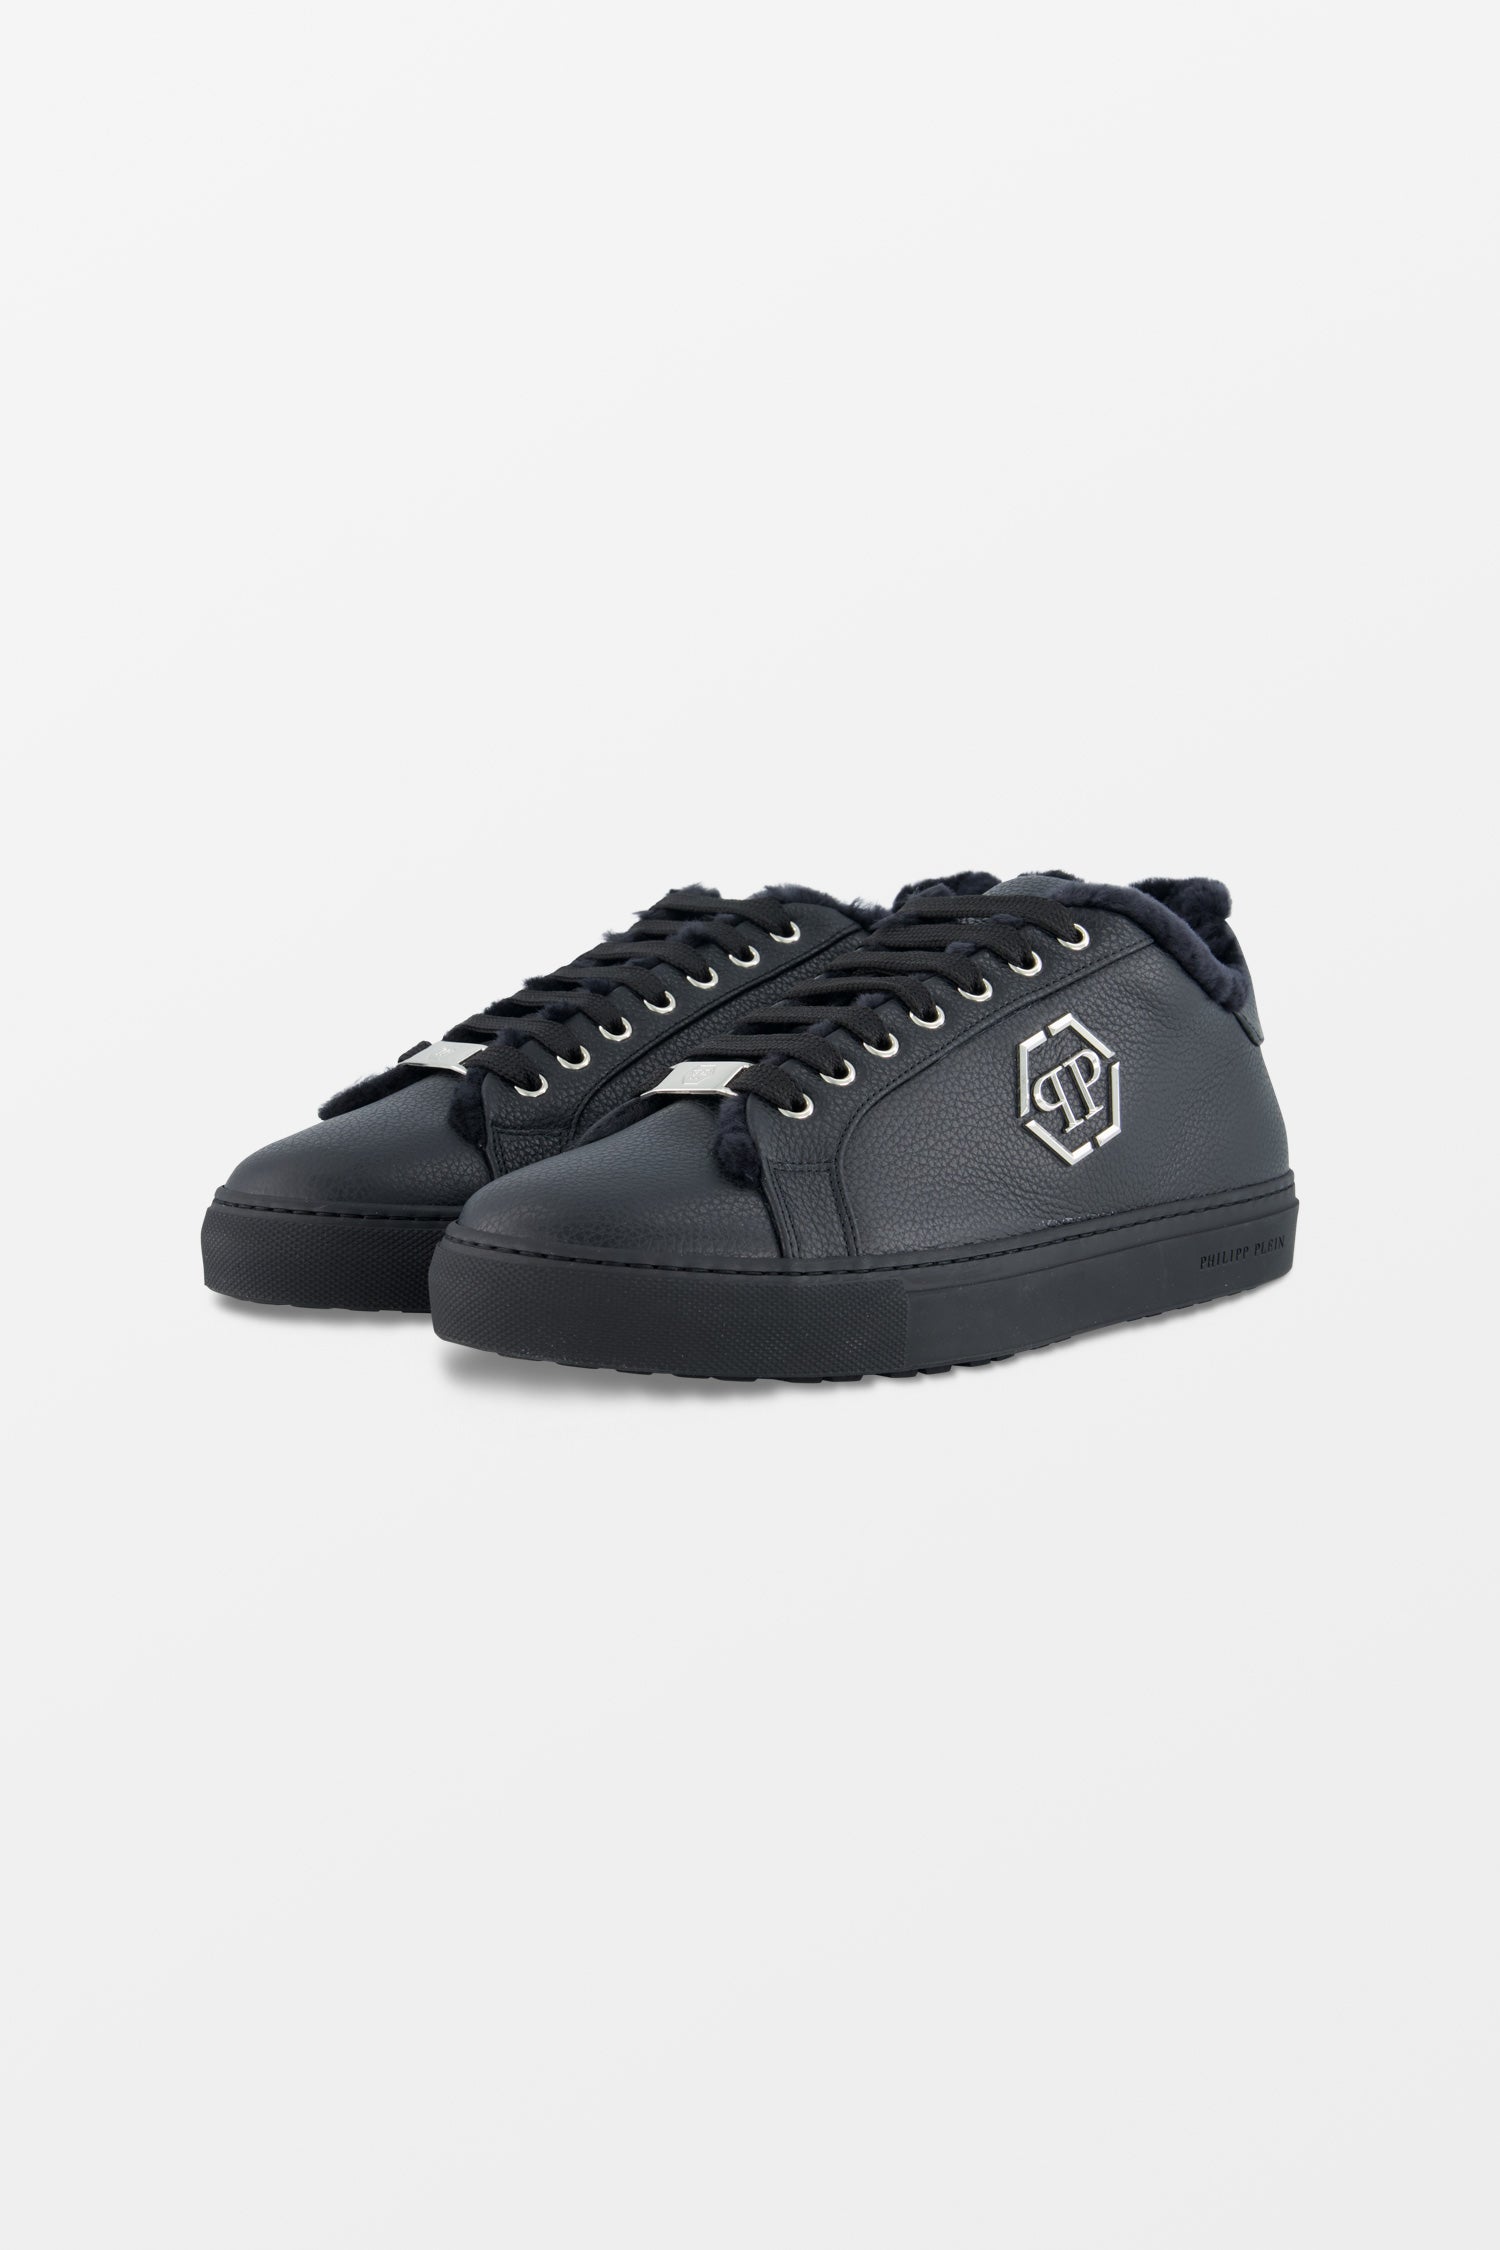 Philipp Plein Black Lo-Top Hexagon Sneakers